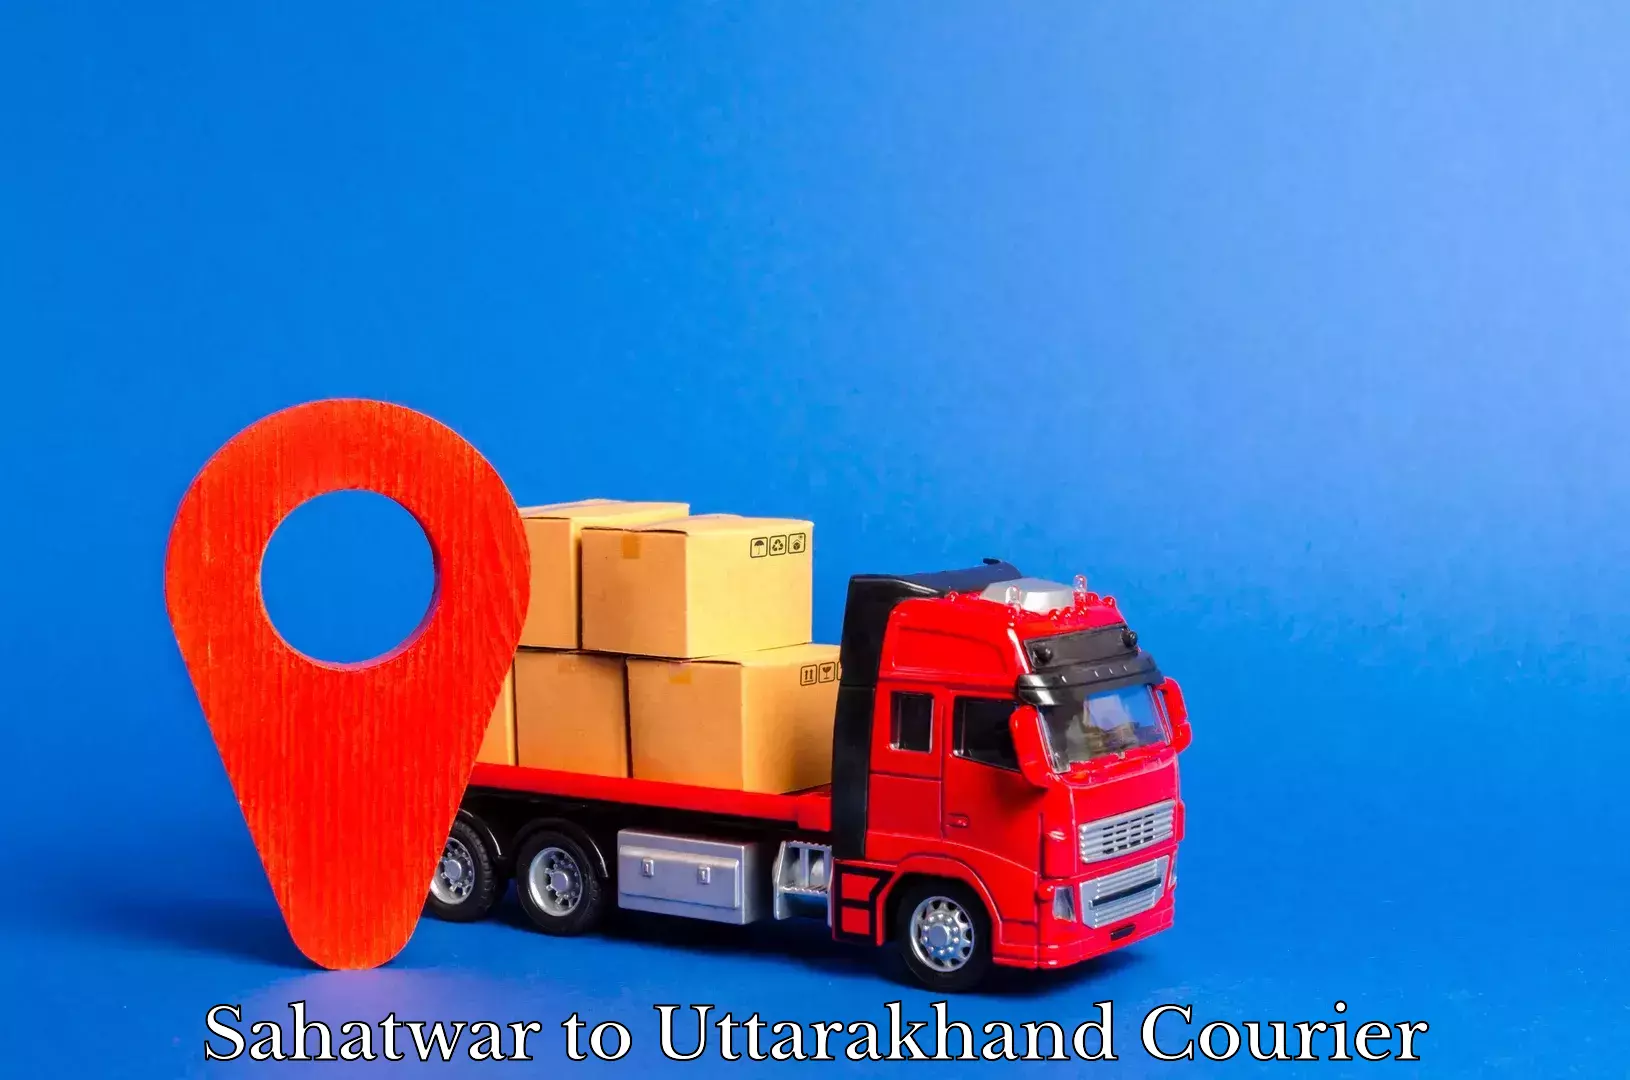 Flexible delivery schedules Sahatwar to Uttarakhand